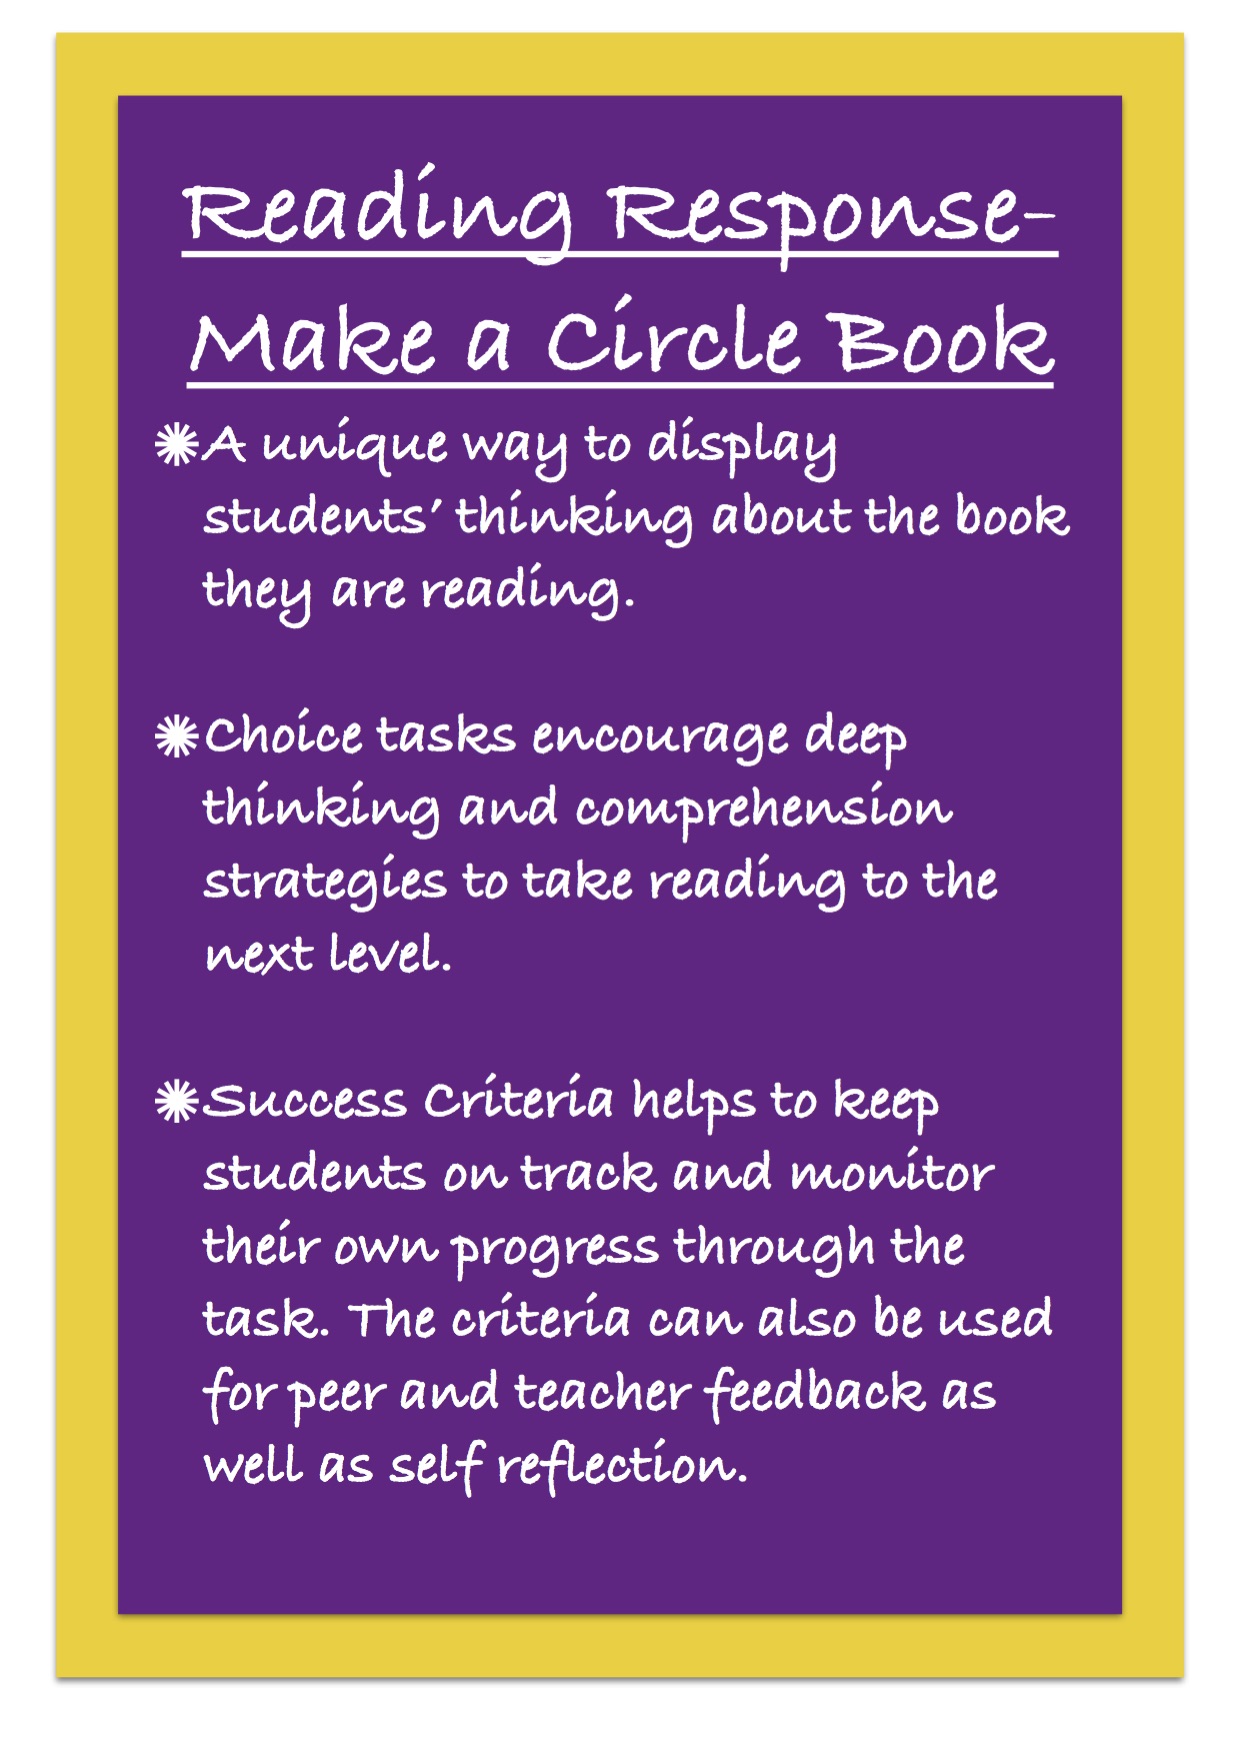 Reading Response - Make a circle book